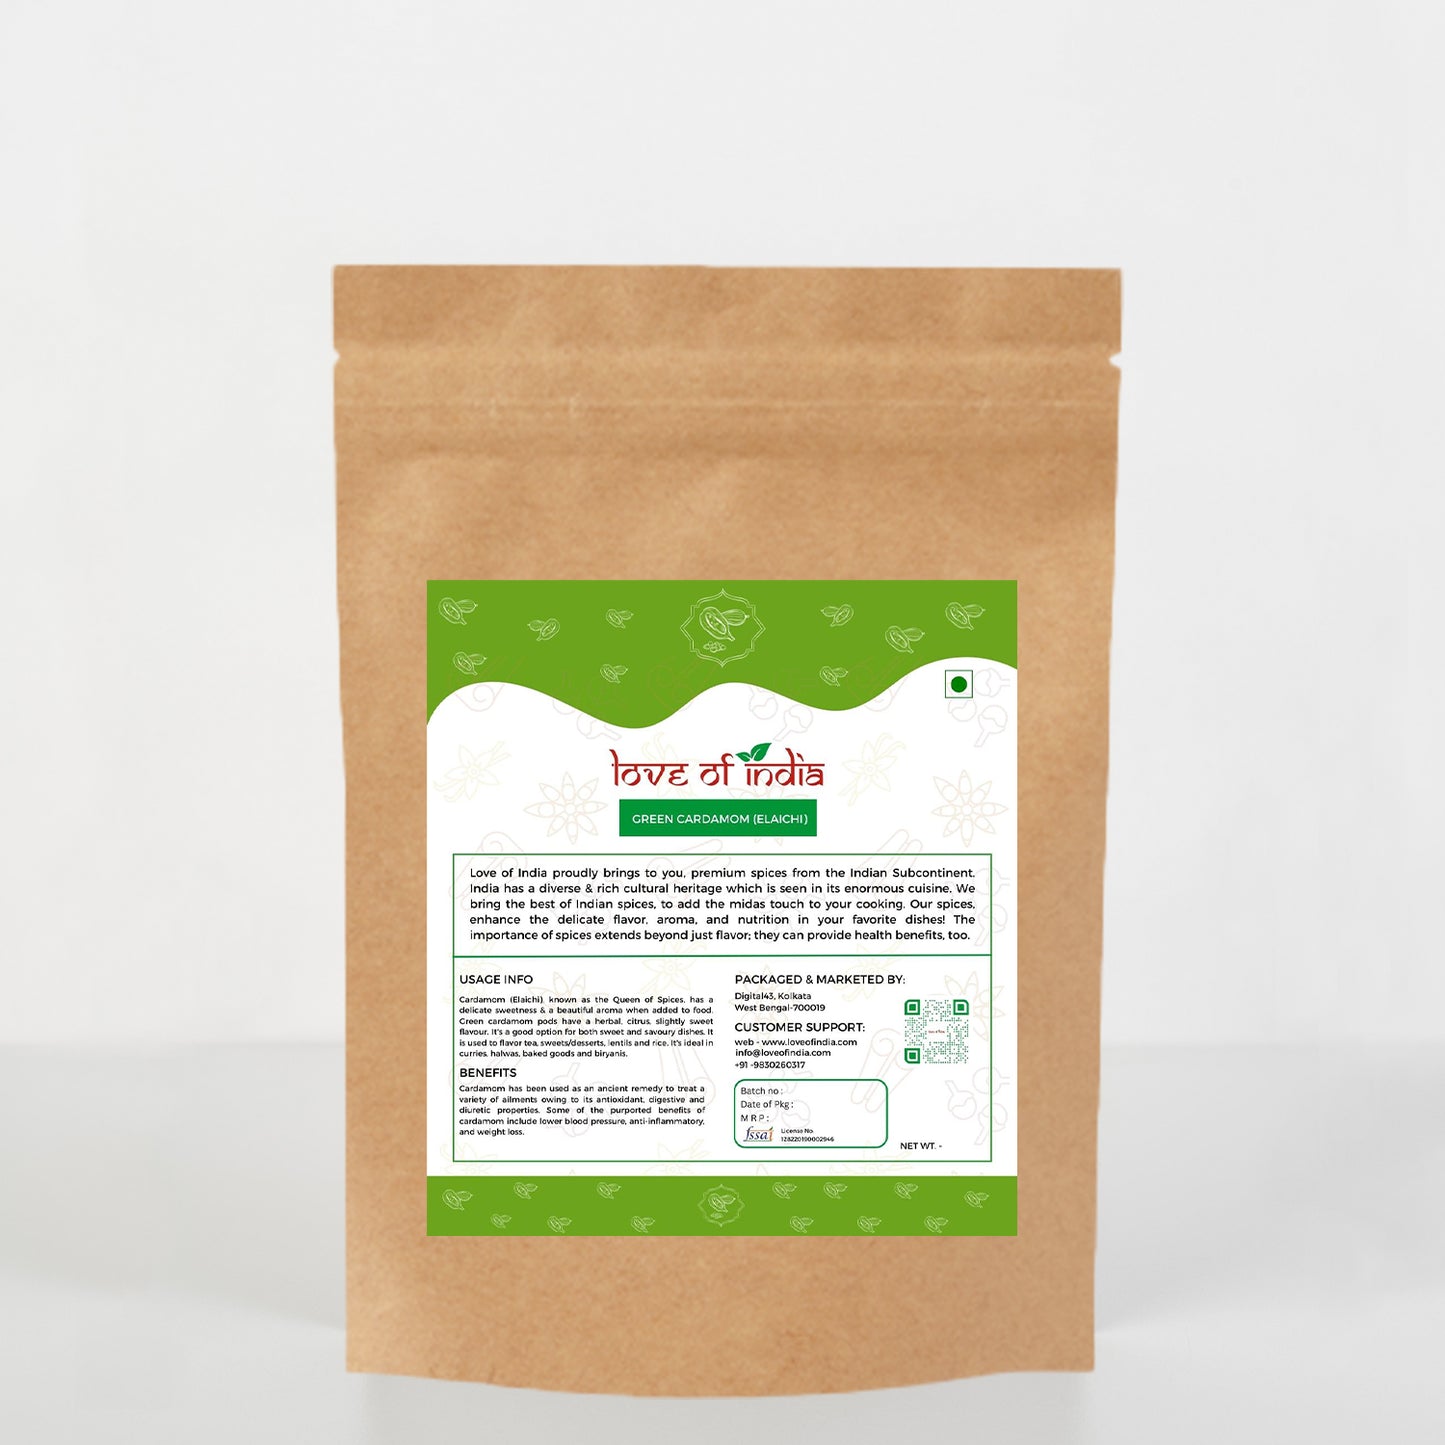 Organically Grown Green Cardamom (Elaichi) 8mm+ | Kerala (Idduki) | Premium Export Quality